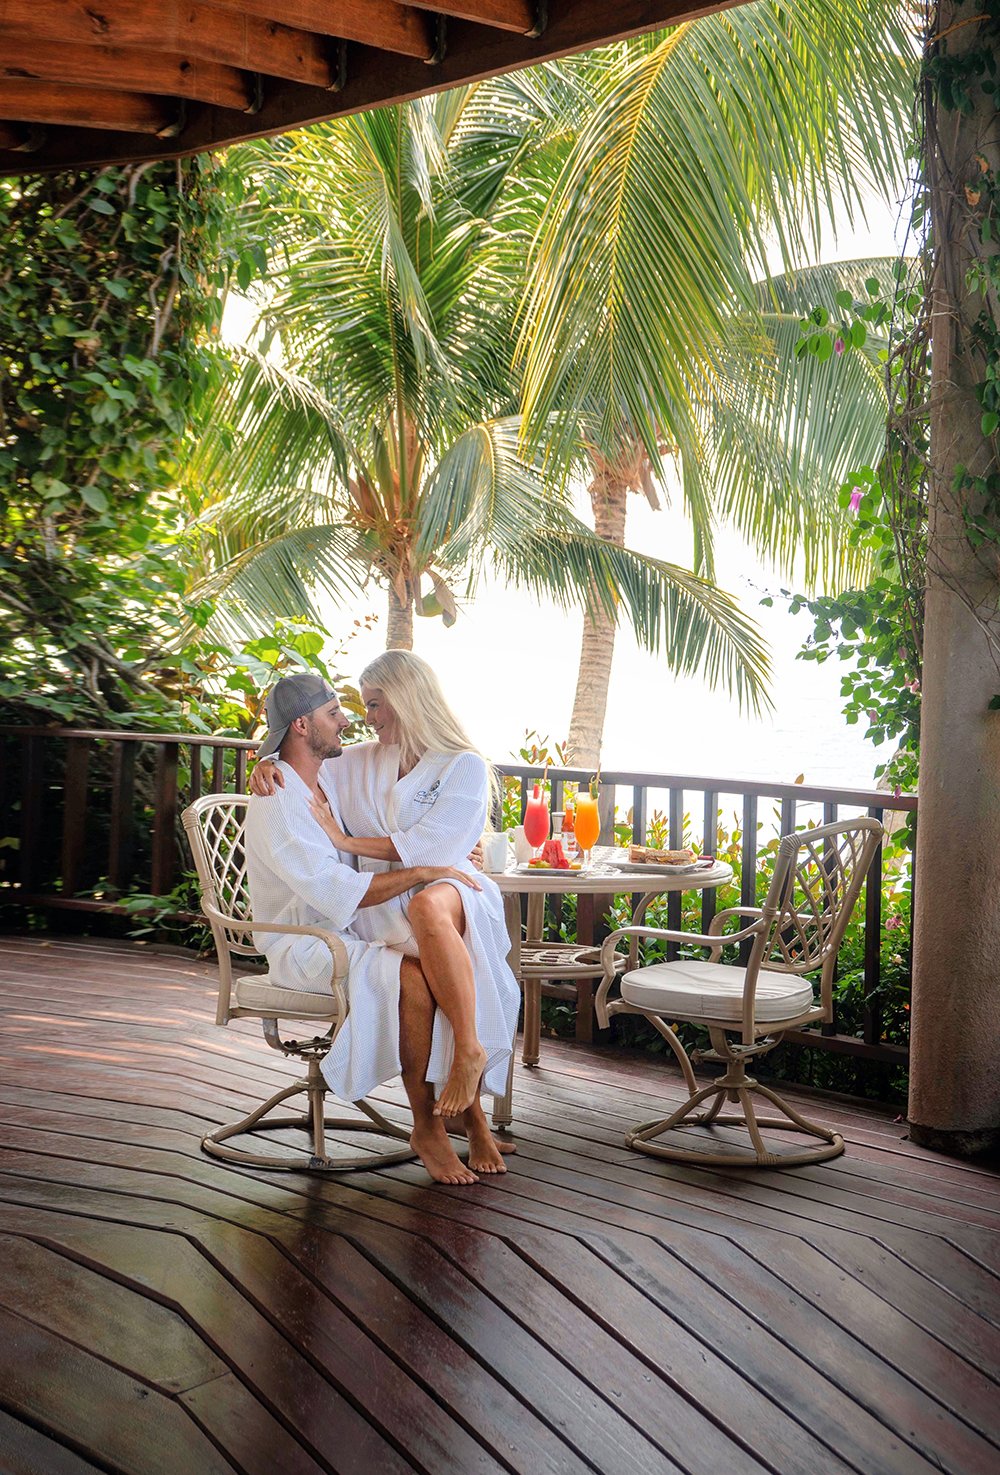 Chabil Mar Luxury Villas - Placencia, Belize Best Honeymoon Resort